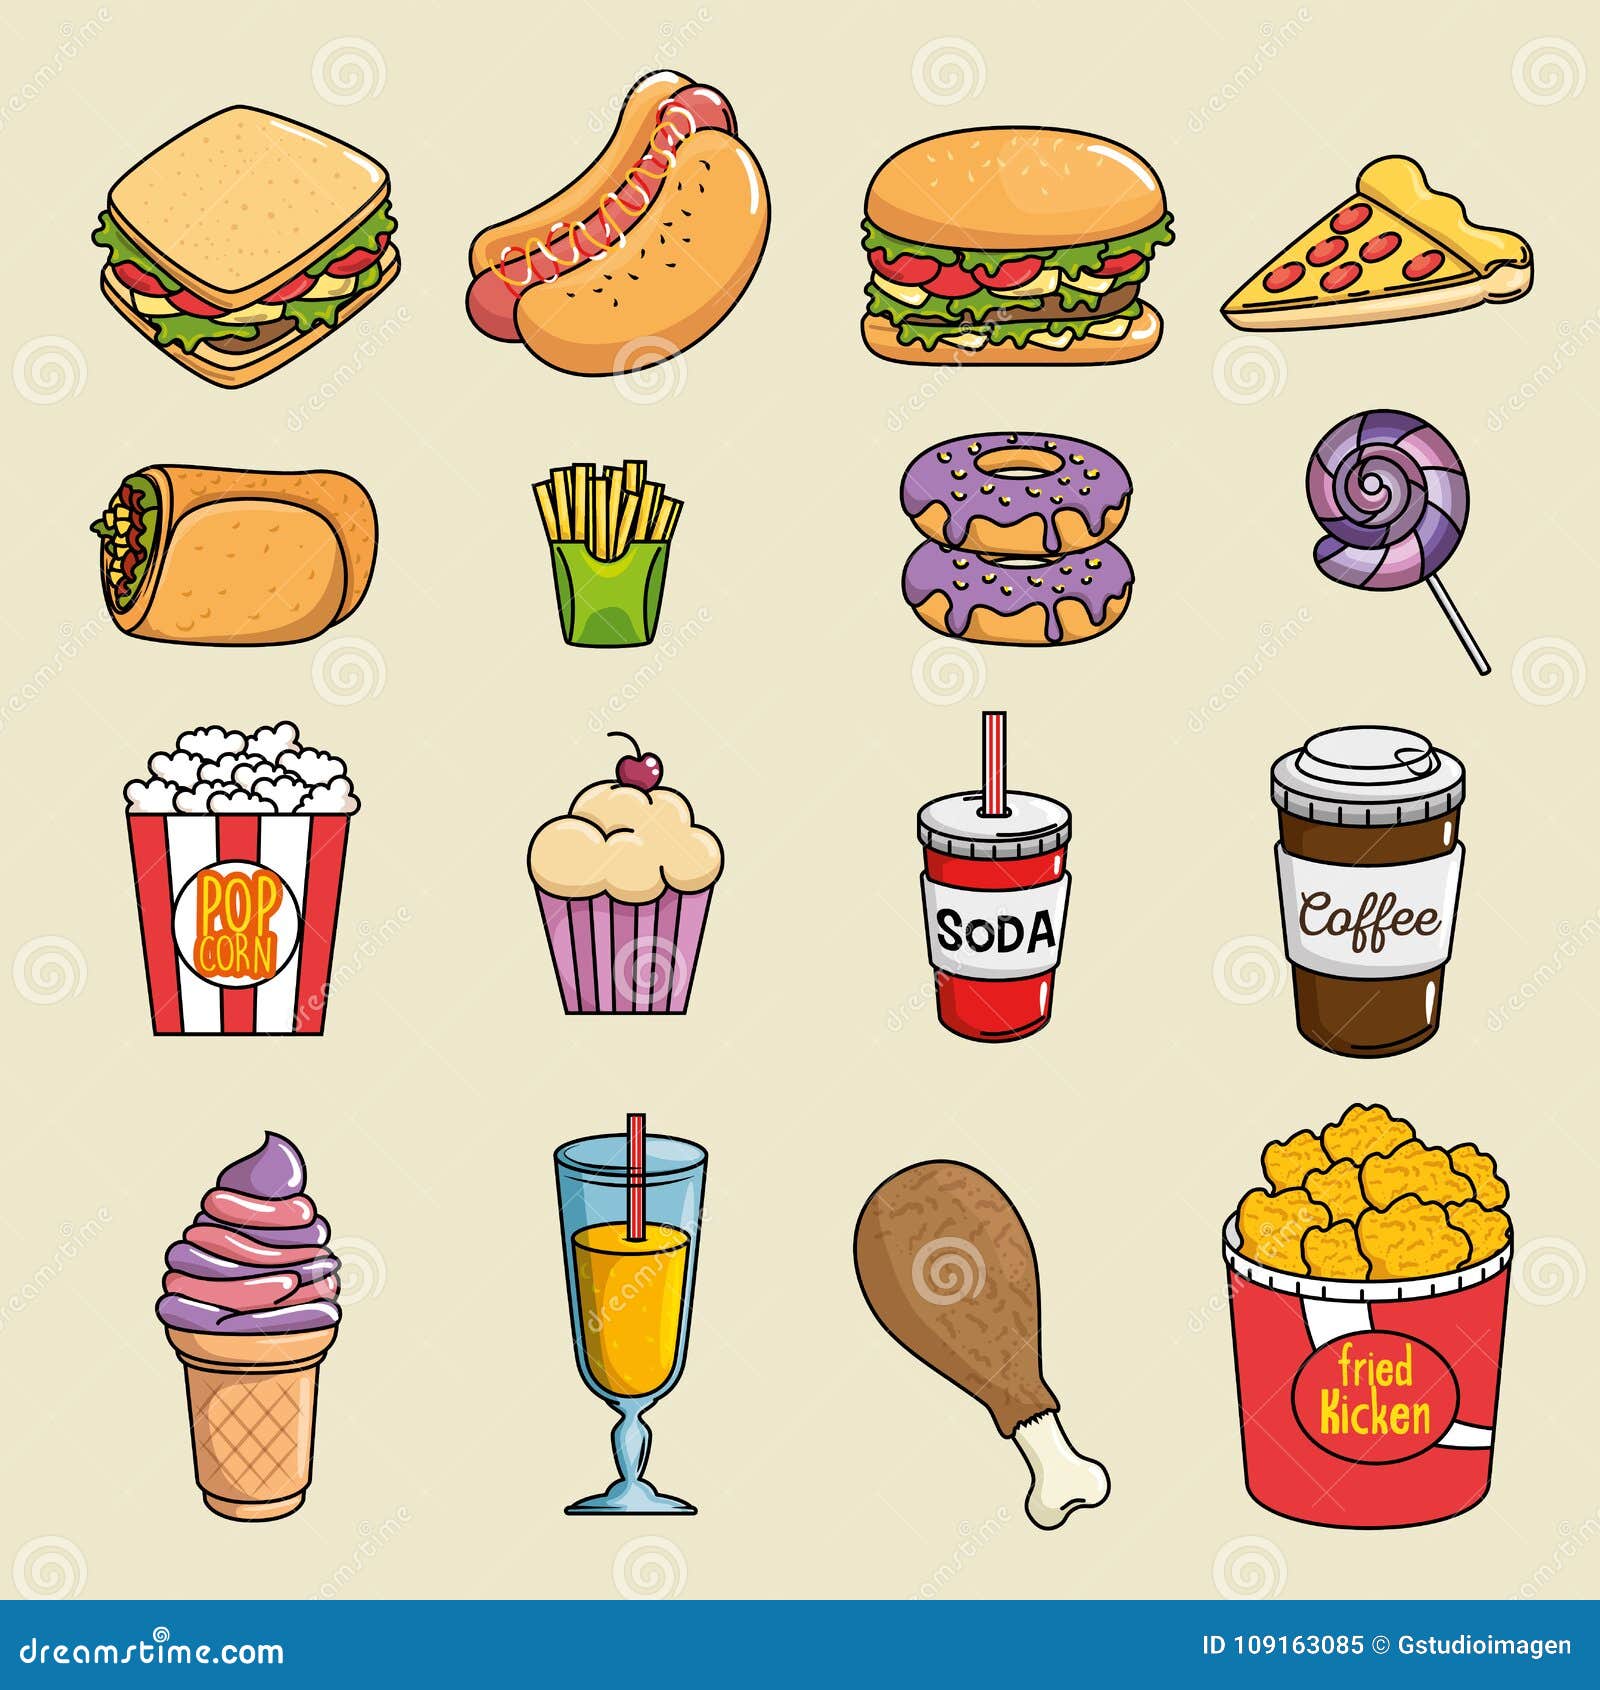 Fast Food Stickers